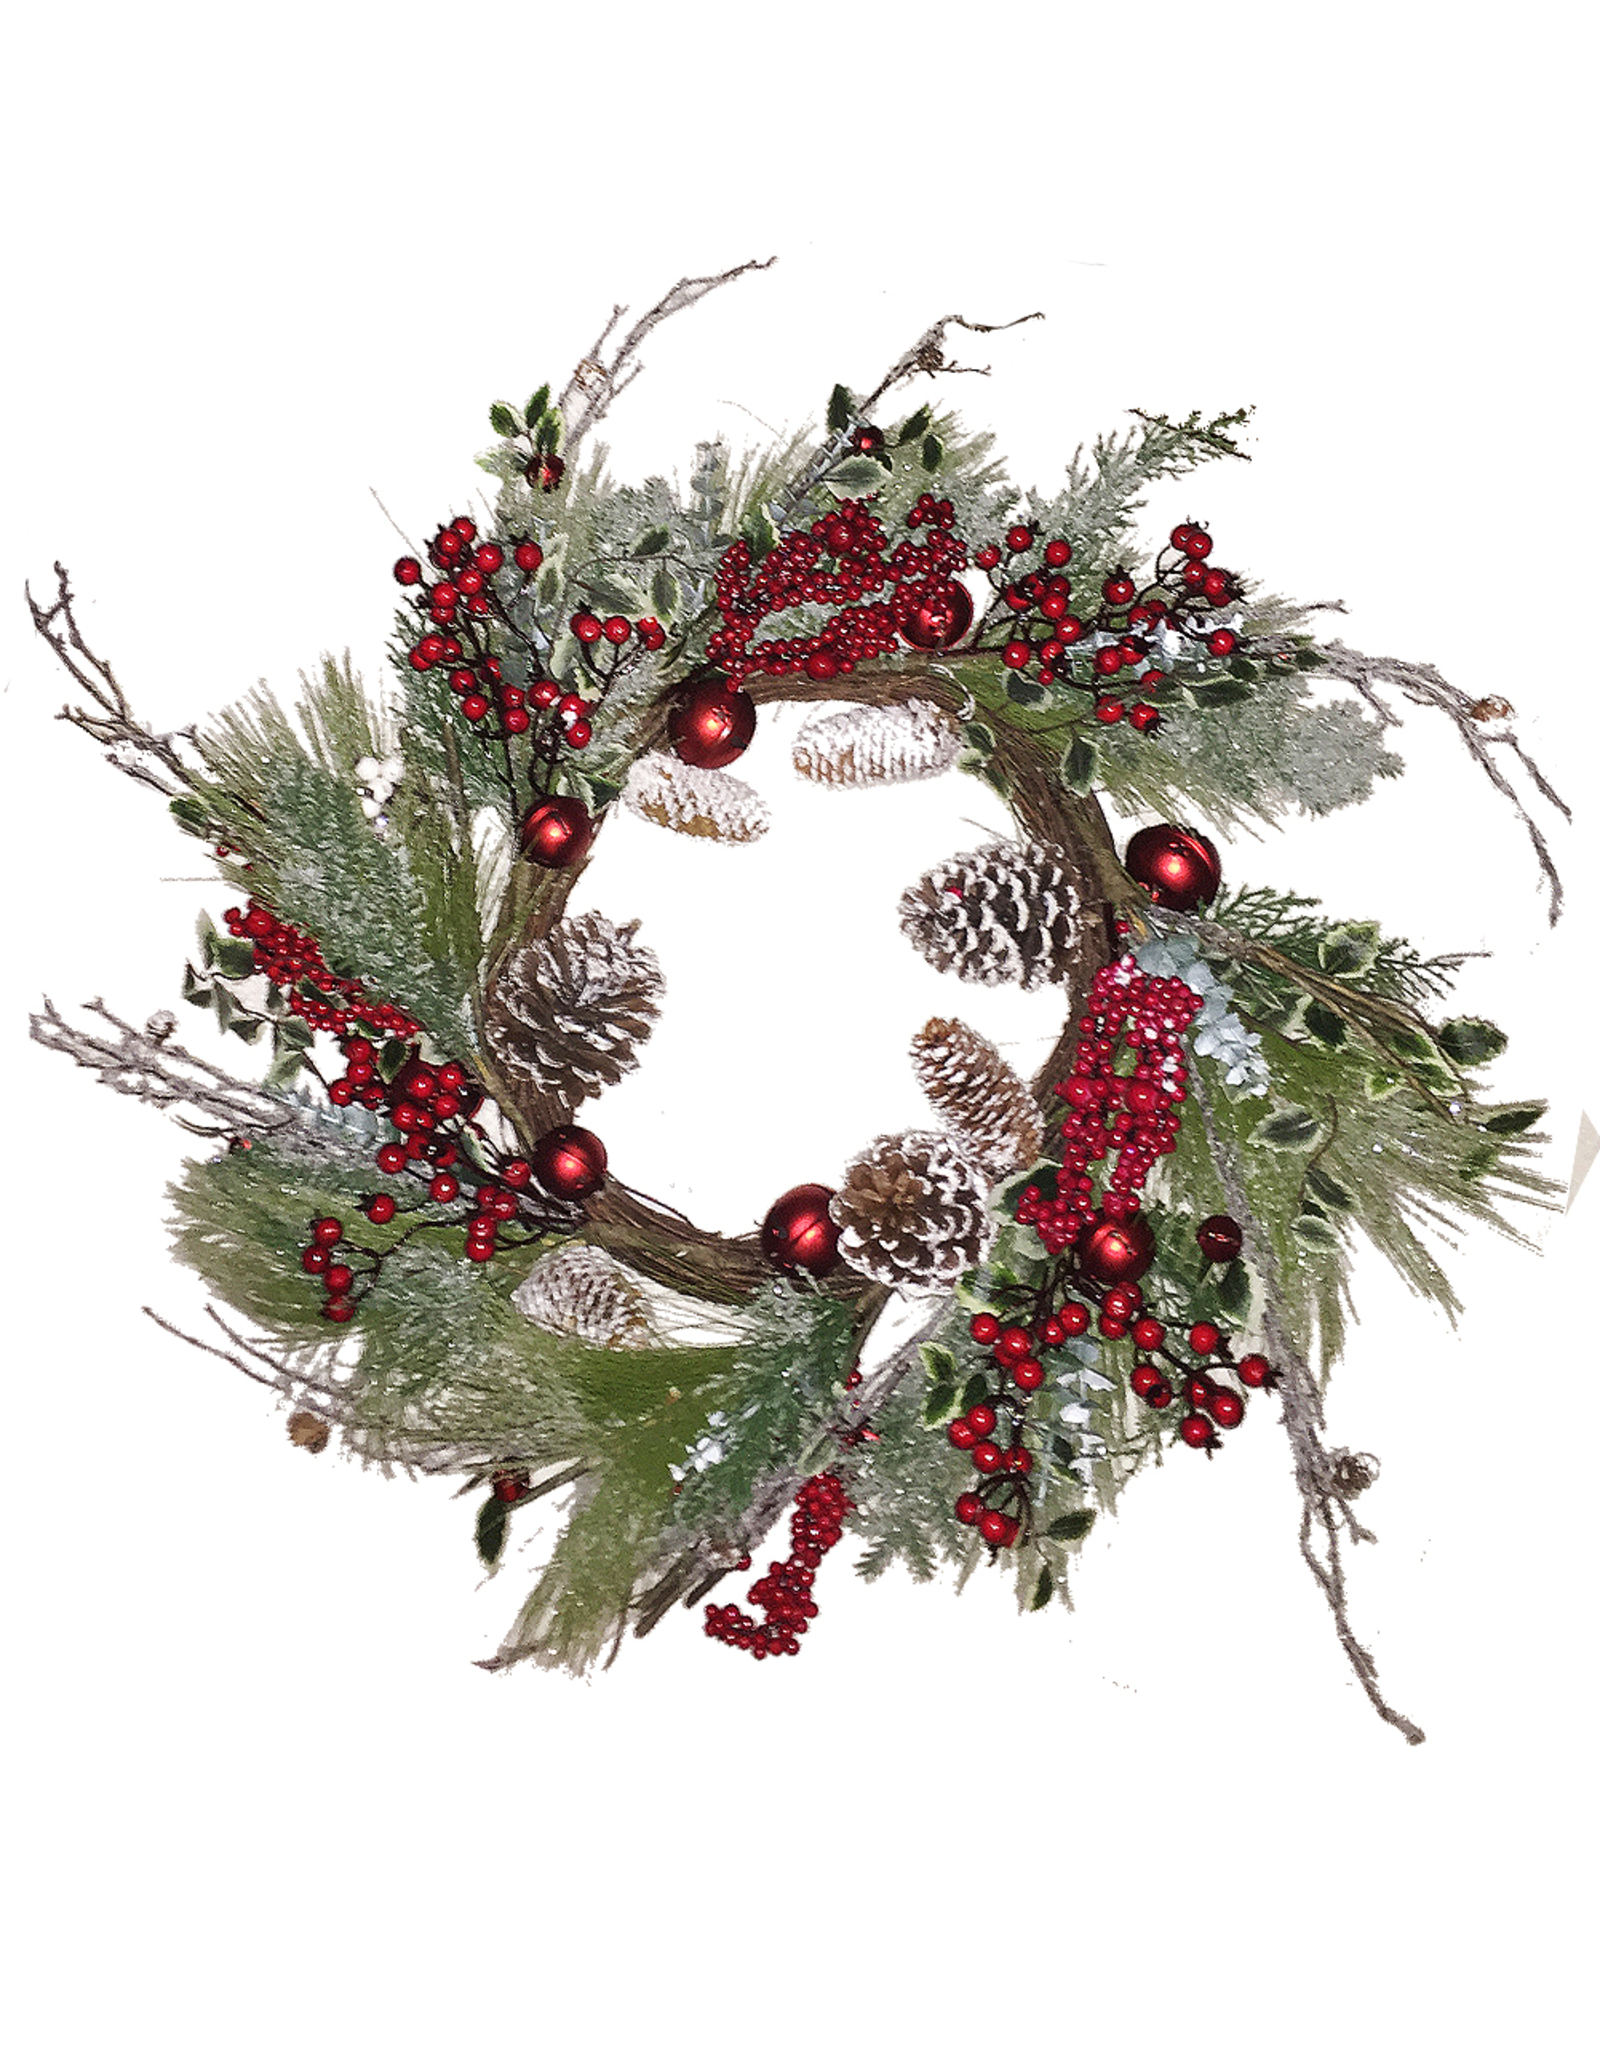 Darice Christmas Wreath Mixed Pine W Cones Red Berries 26 inch